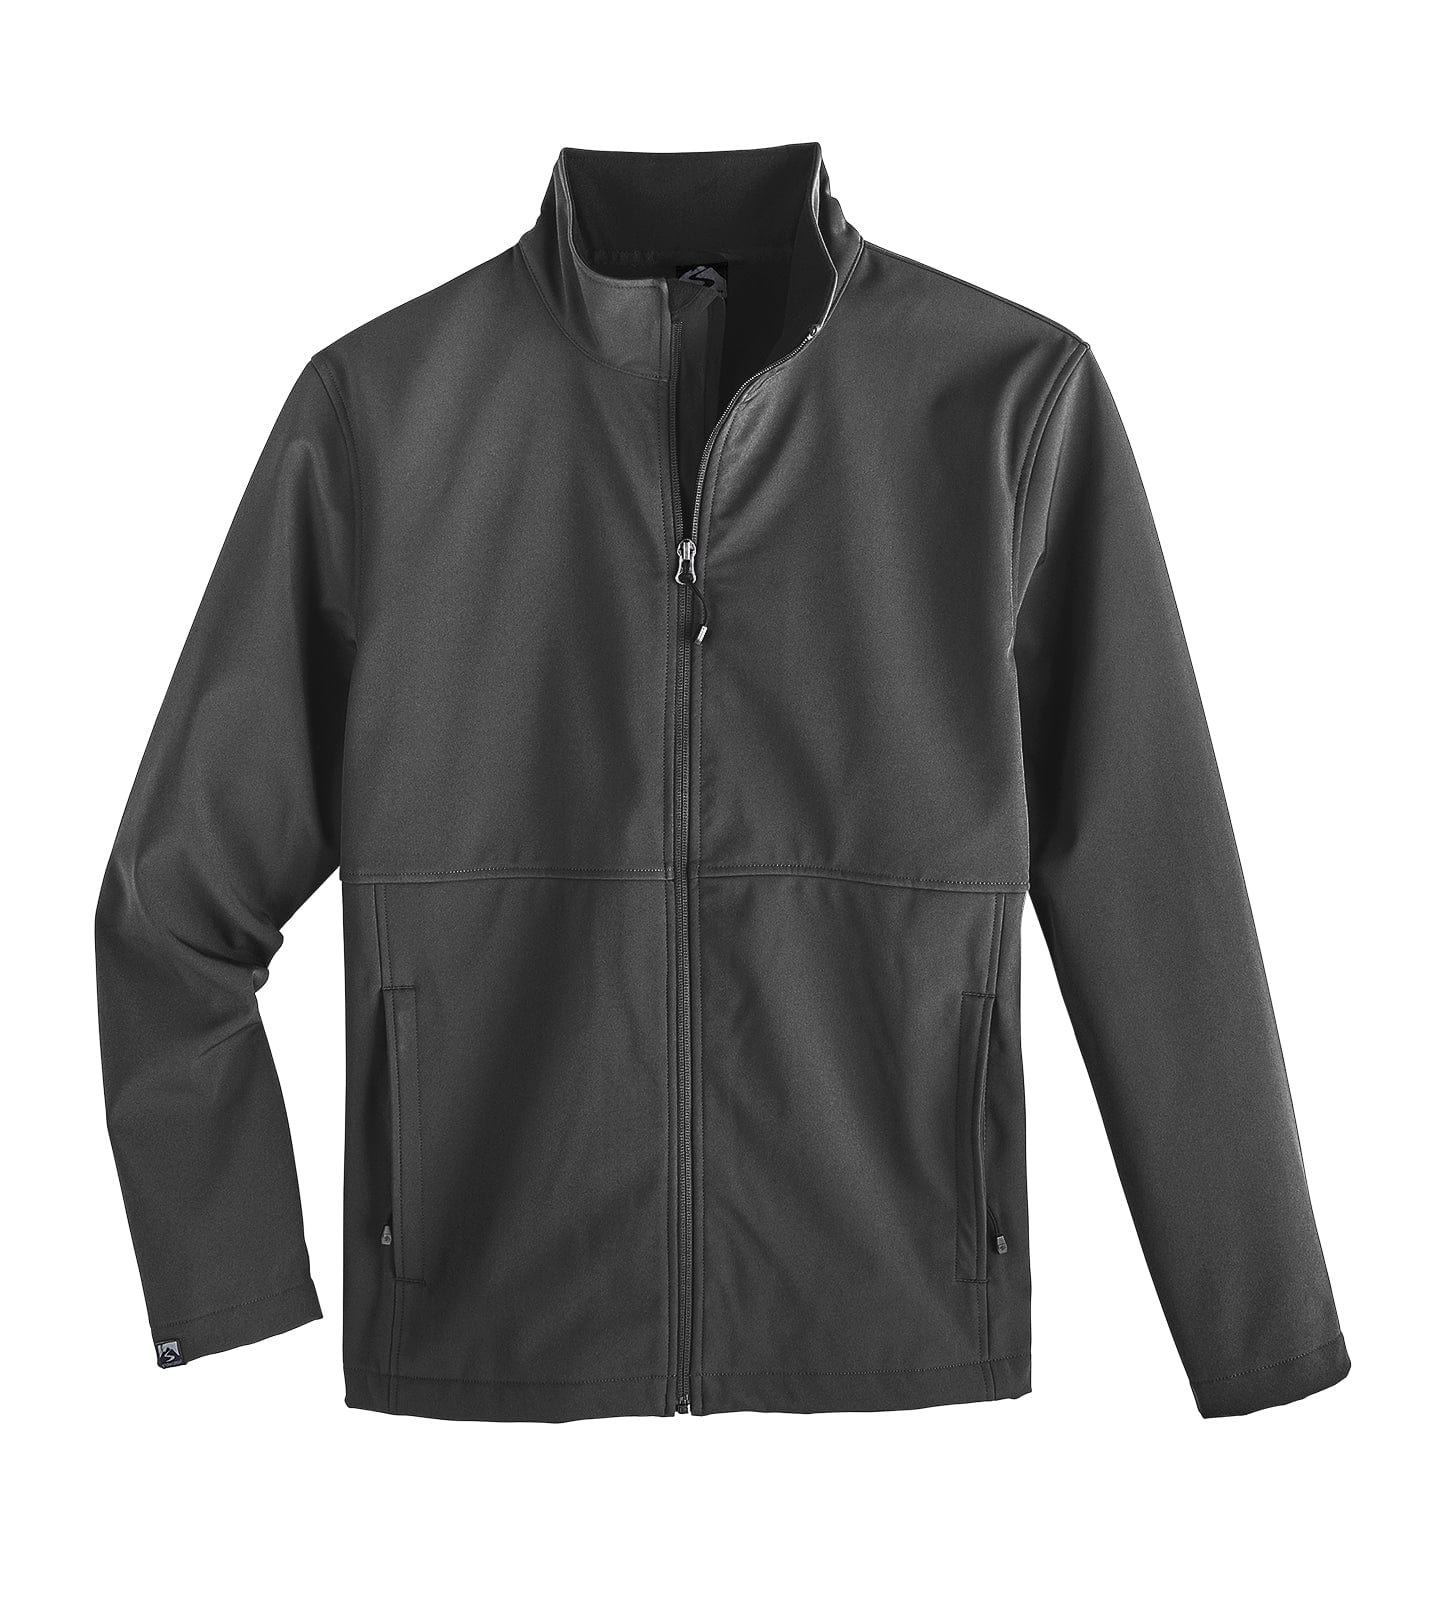 Customizable Storm Creek® Men's Trailblazer Jacket in jet/black.